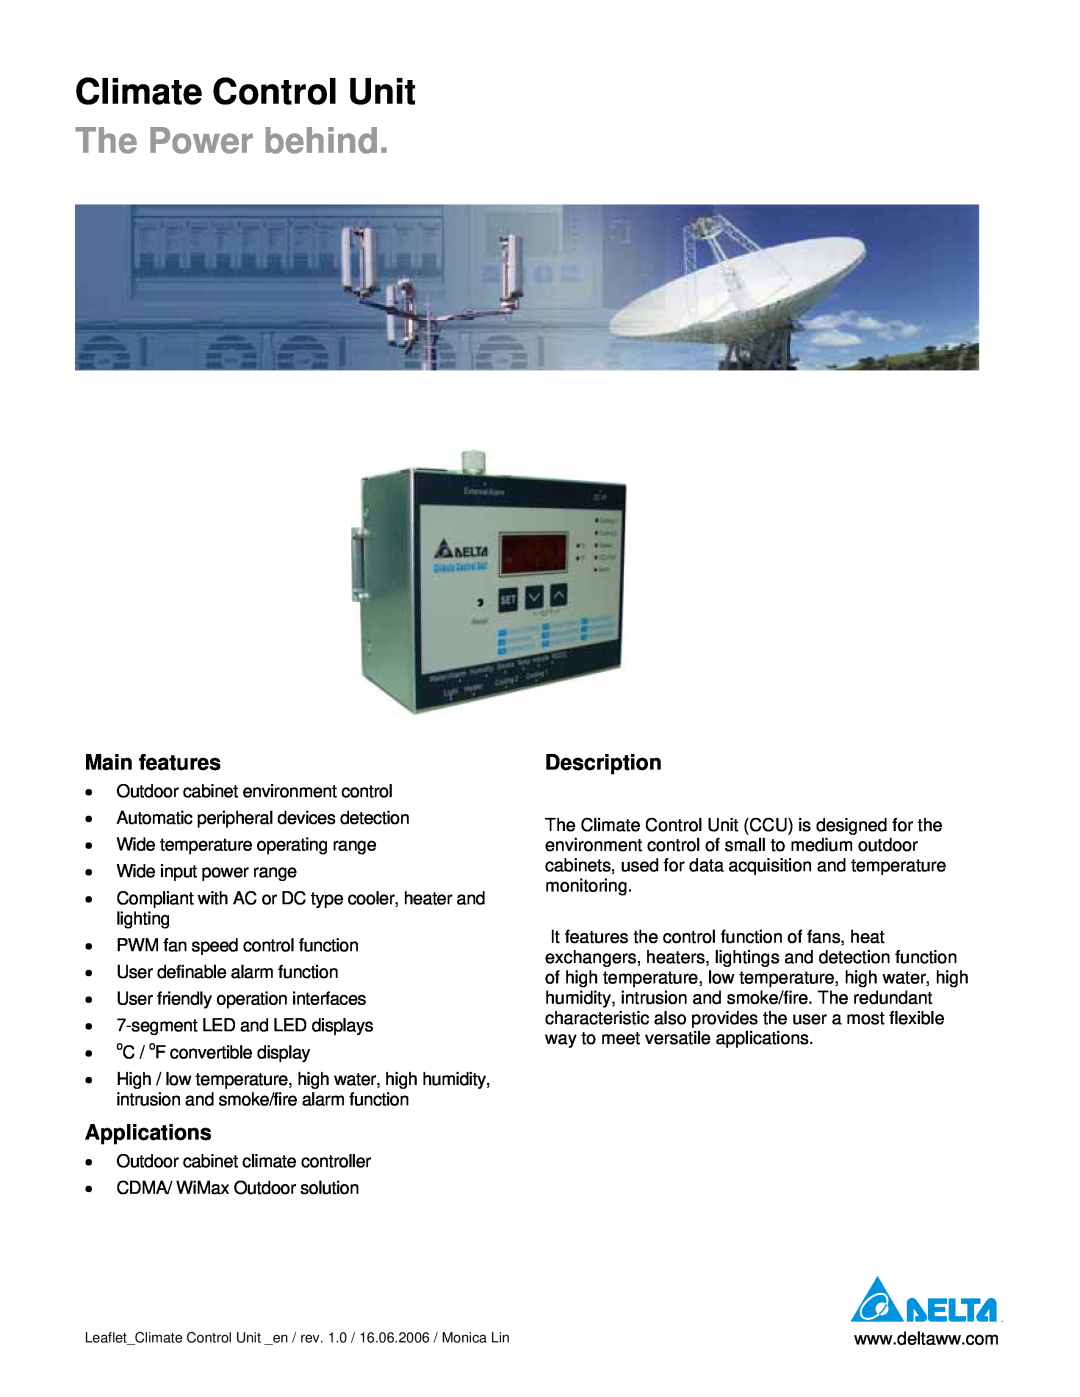 Delta Electronics CCU manual Climate Control Unit The Power behind, Main features, Applications, Description 